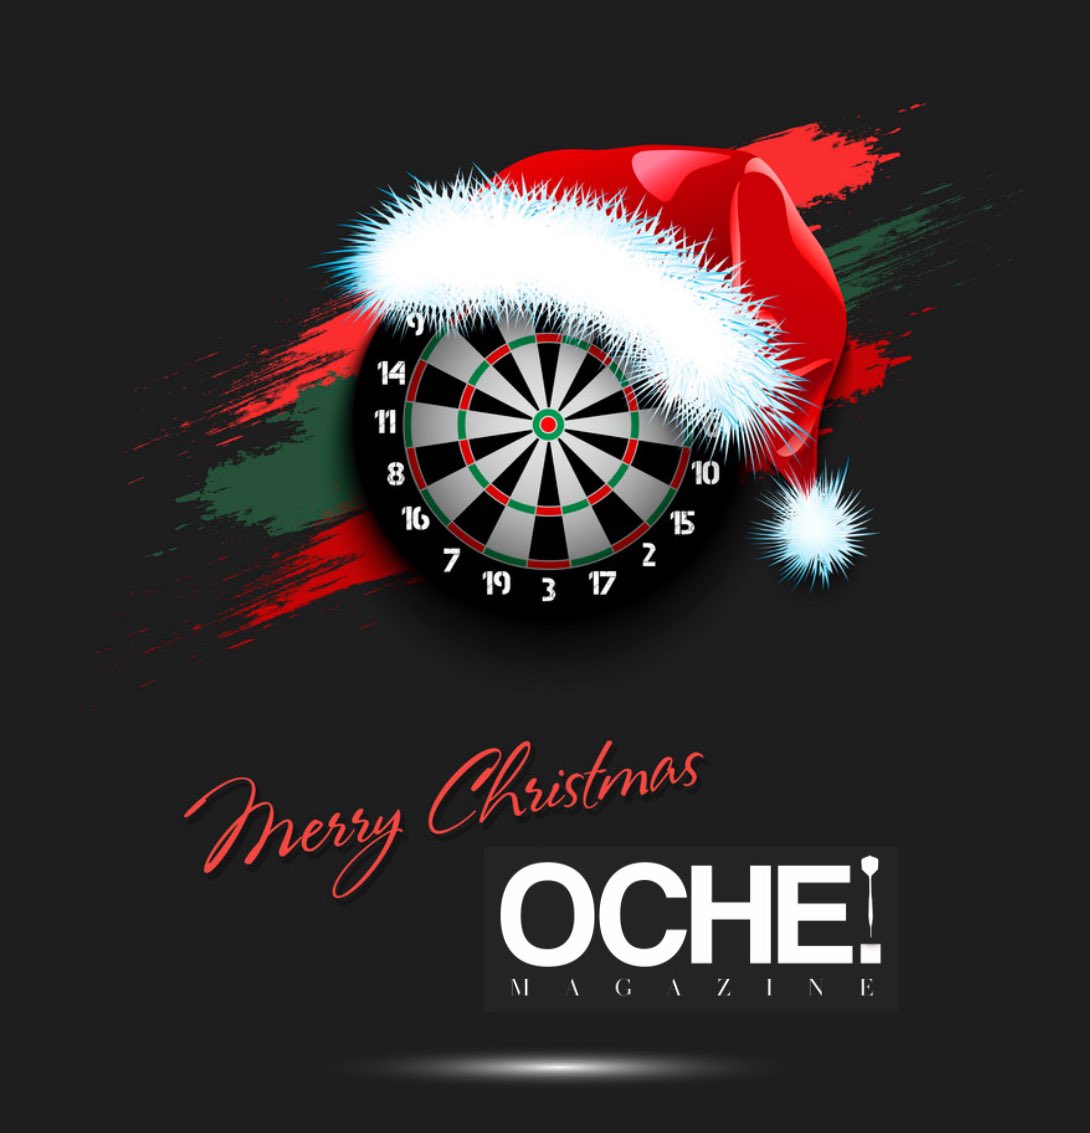 Dårlig skæbne veltalende Er O C H E ! on Twitter: "Merry Christmas from Oche! Magazine. How many of you  got Darts products? 😂😂😂🎅🏻👍🎯 #MerryChristmas https://t.co/XzorbFe2ef"  / Twitter